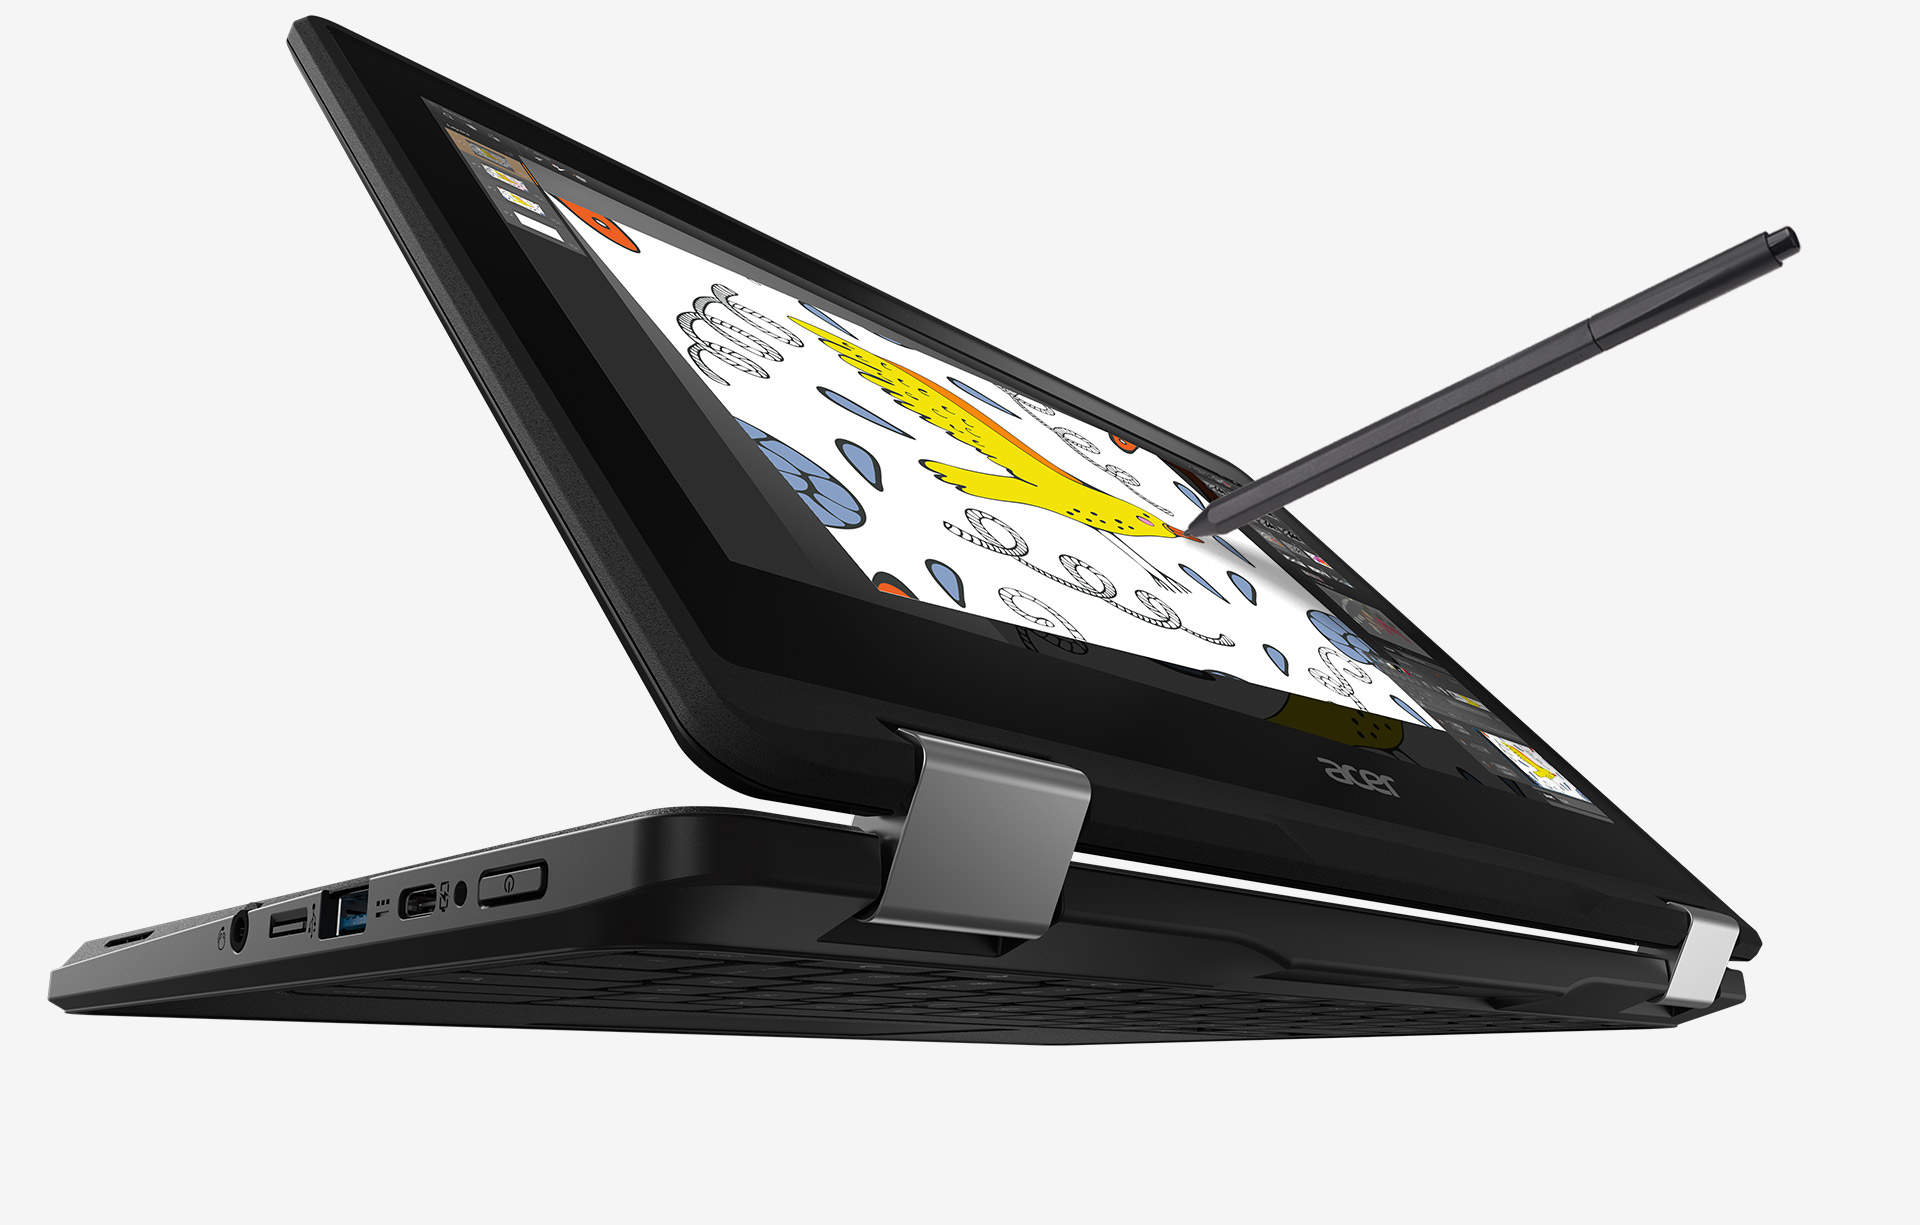 Image of Acer Chromebook in tablet mode